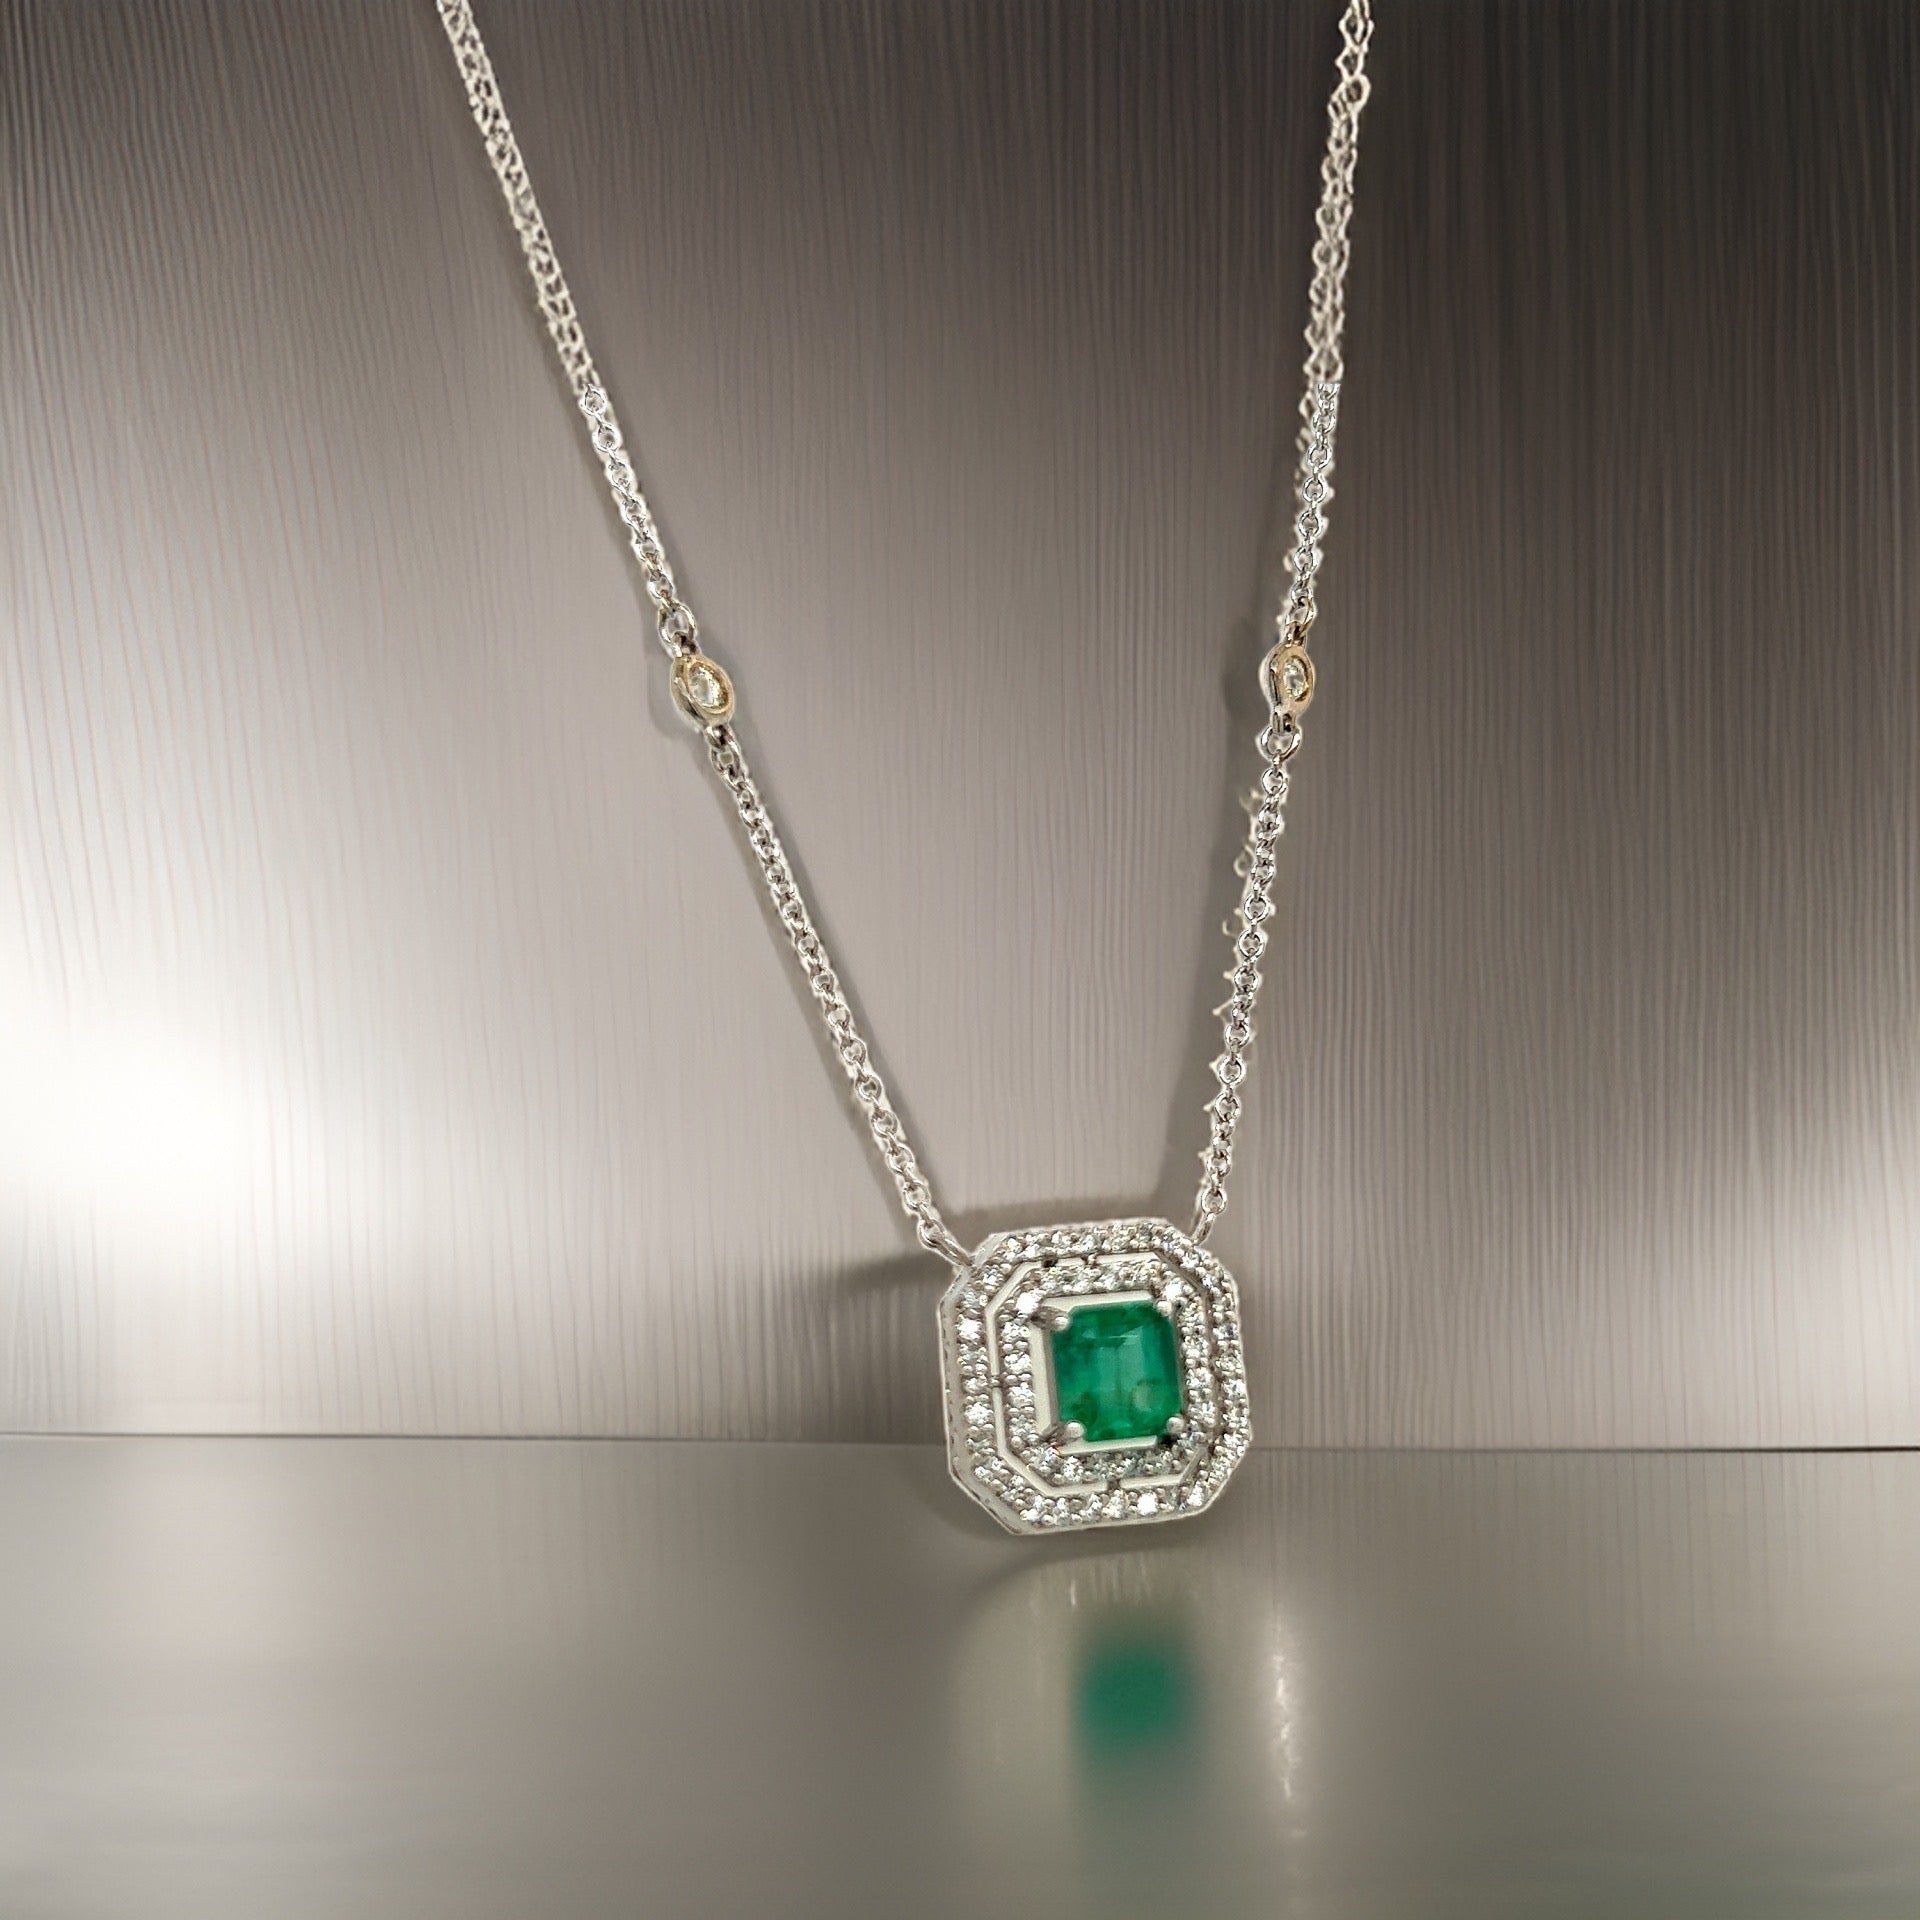 Natural Emerald Diamond Halo Pendant With Chain 18" 14k WG 1.26 TCW Certified $4,950 300677 - Certified Fine Jewelry